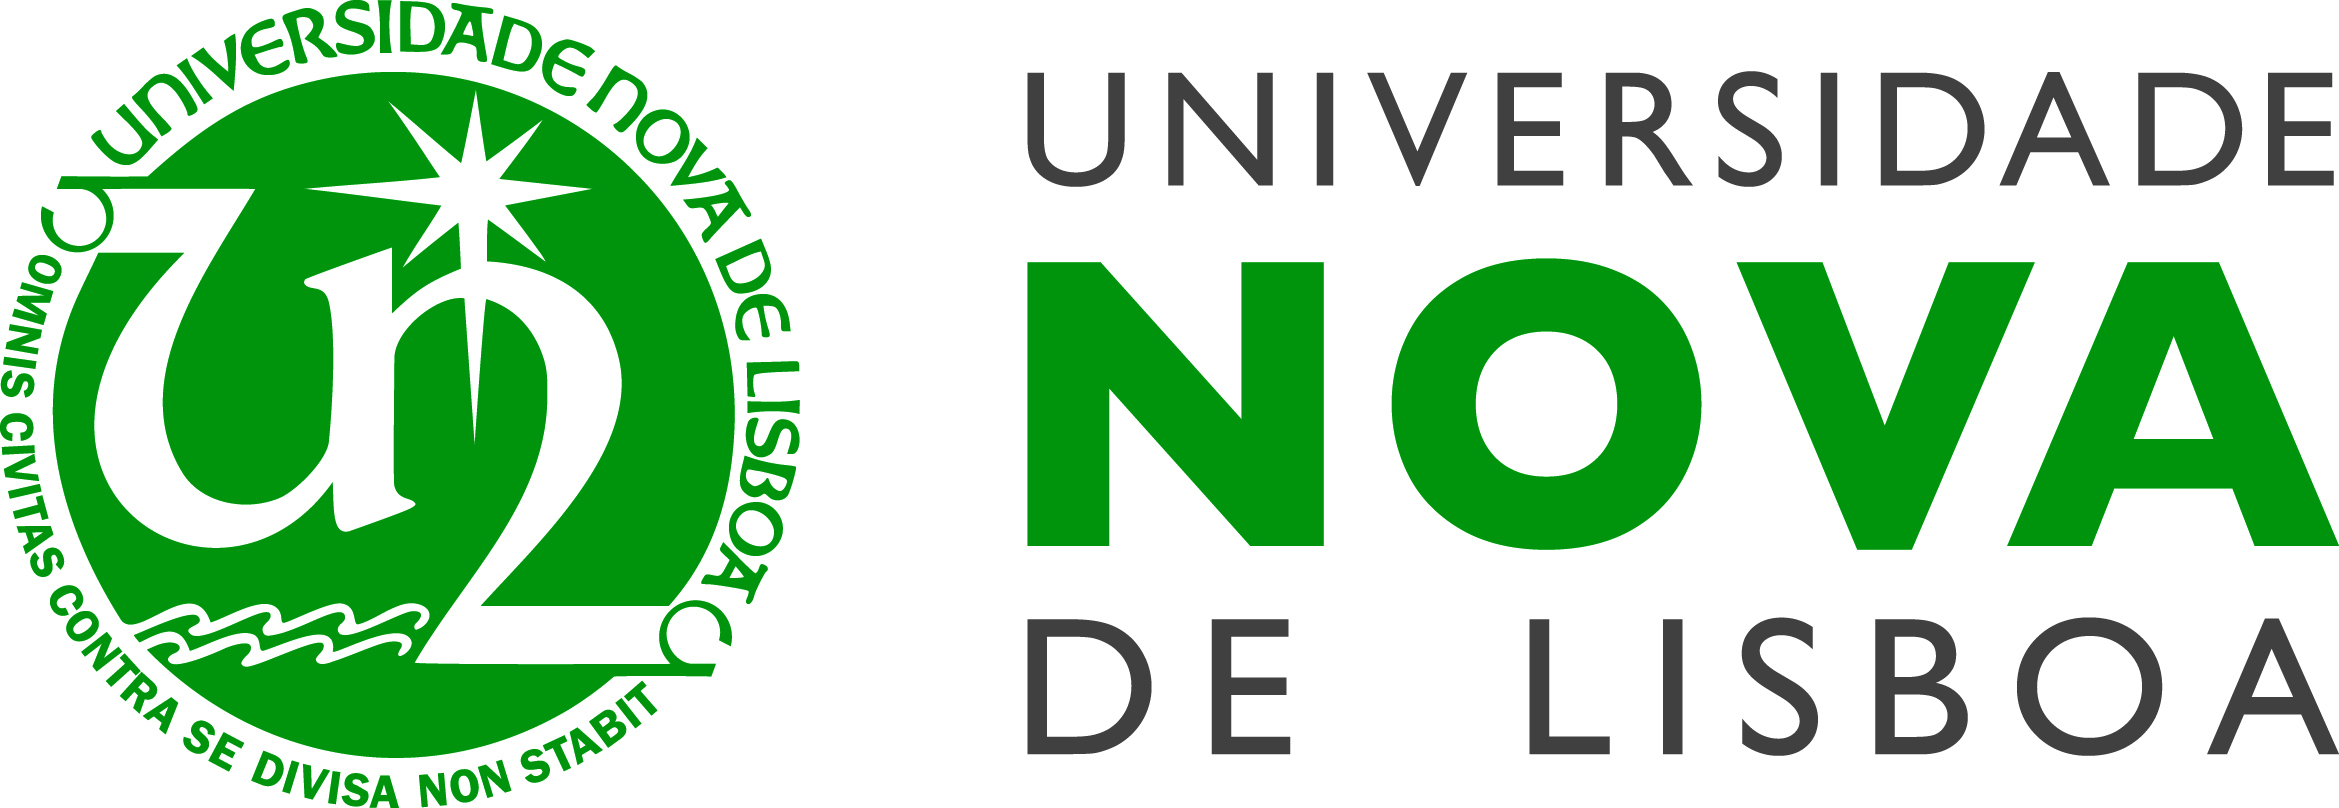 Study in Universidade NOVA de Lisboa with Scholarship